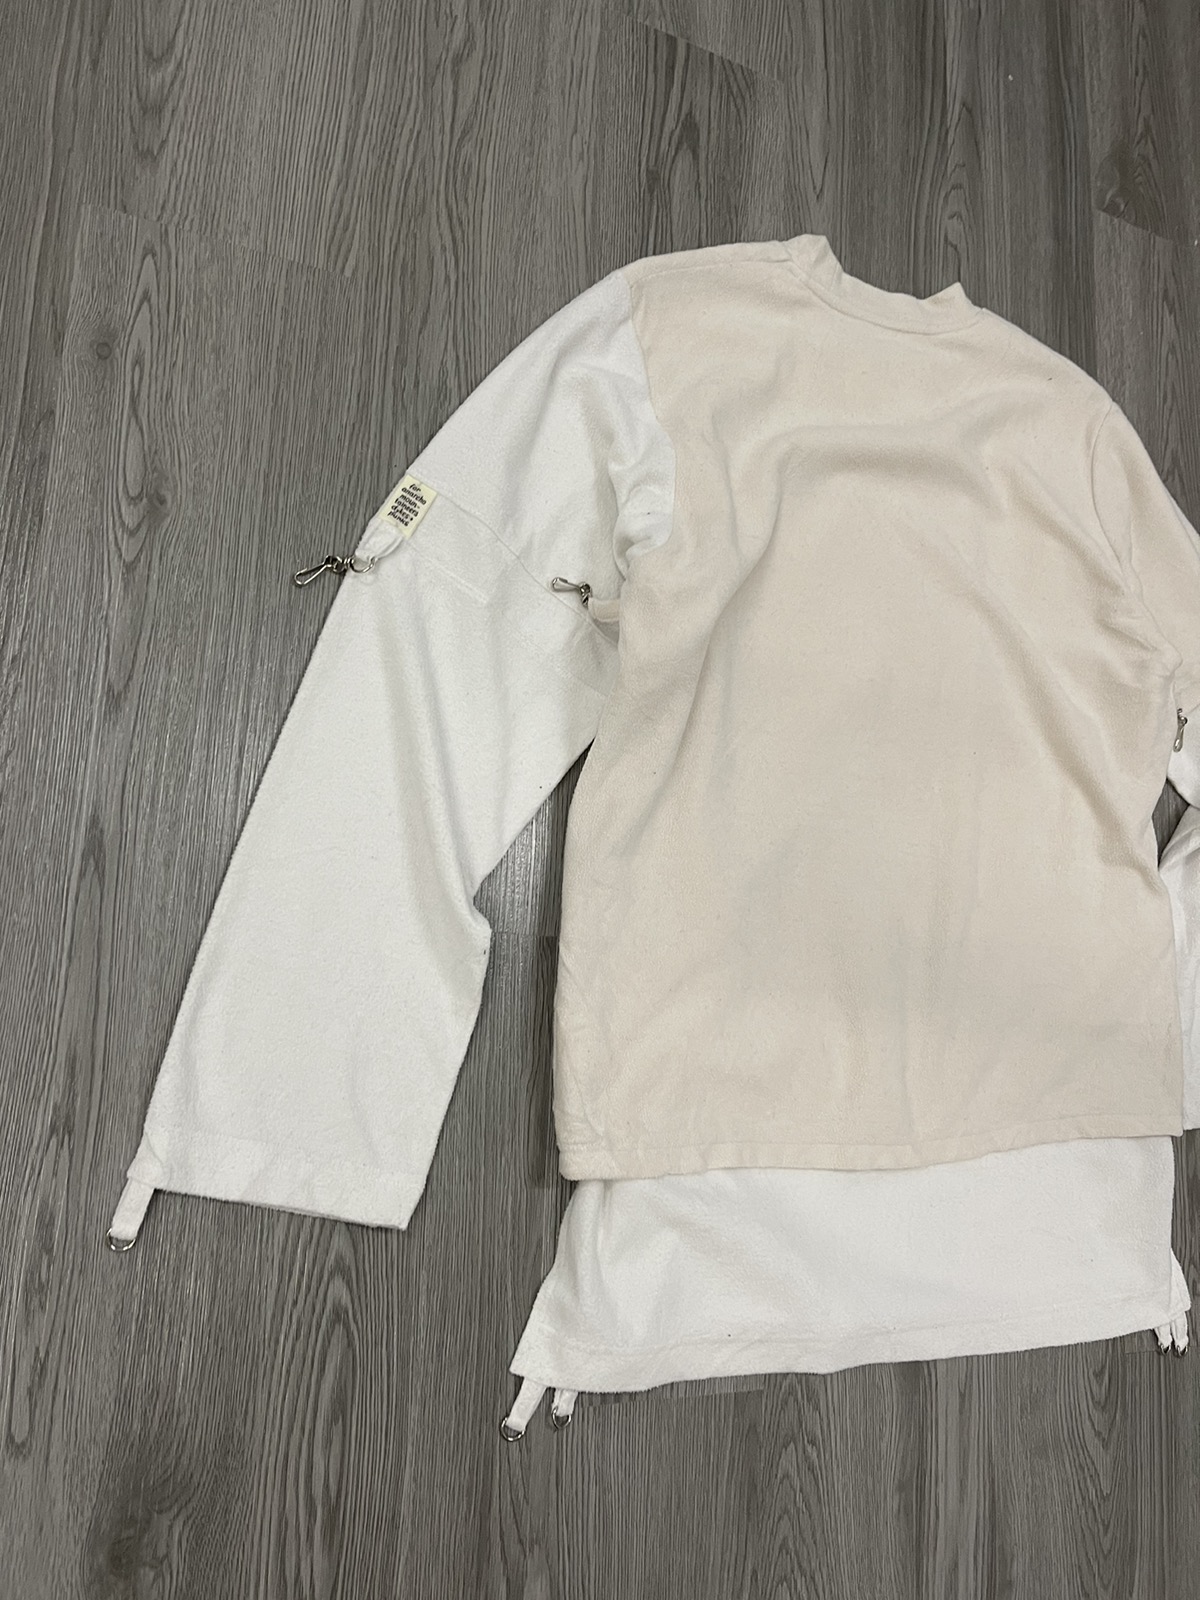 Seditionaries - Mountain Research 2019 COLD fleece muslin layered shirt